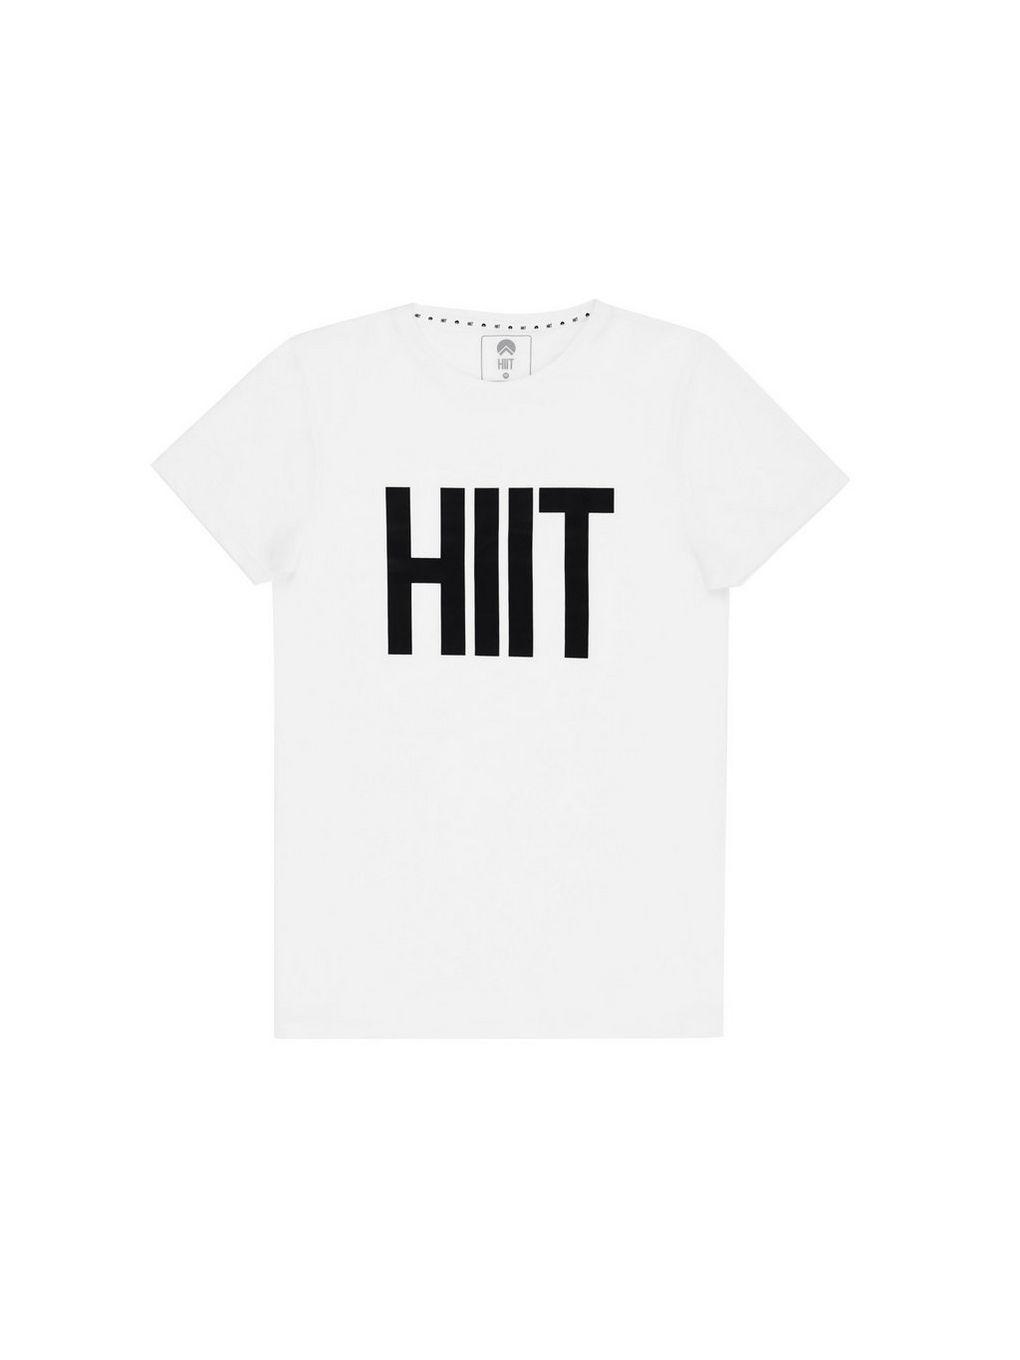 BR Clothing Logo - HIIT White Logo T-Shirt - T-Shirts & Vests - Clothing - Burton Menswear